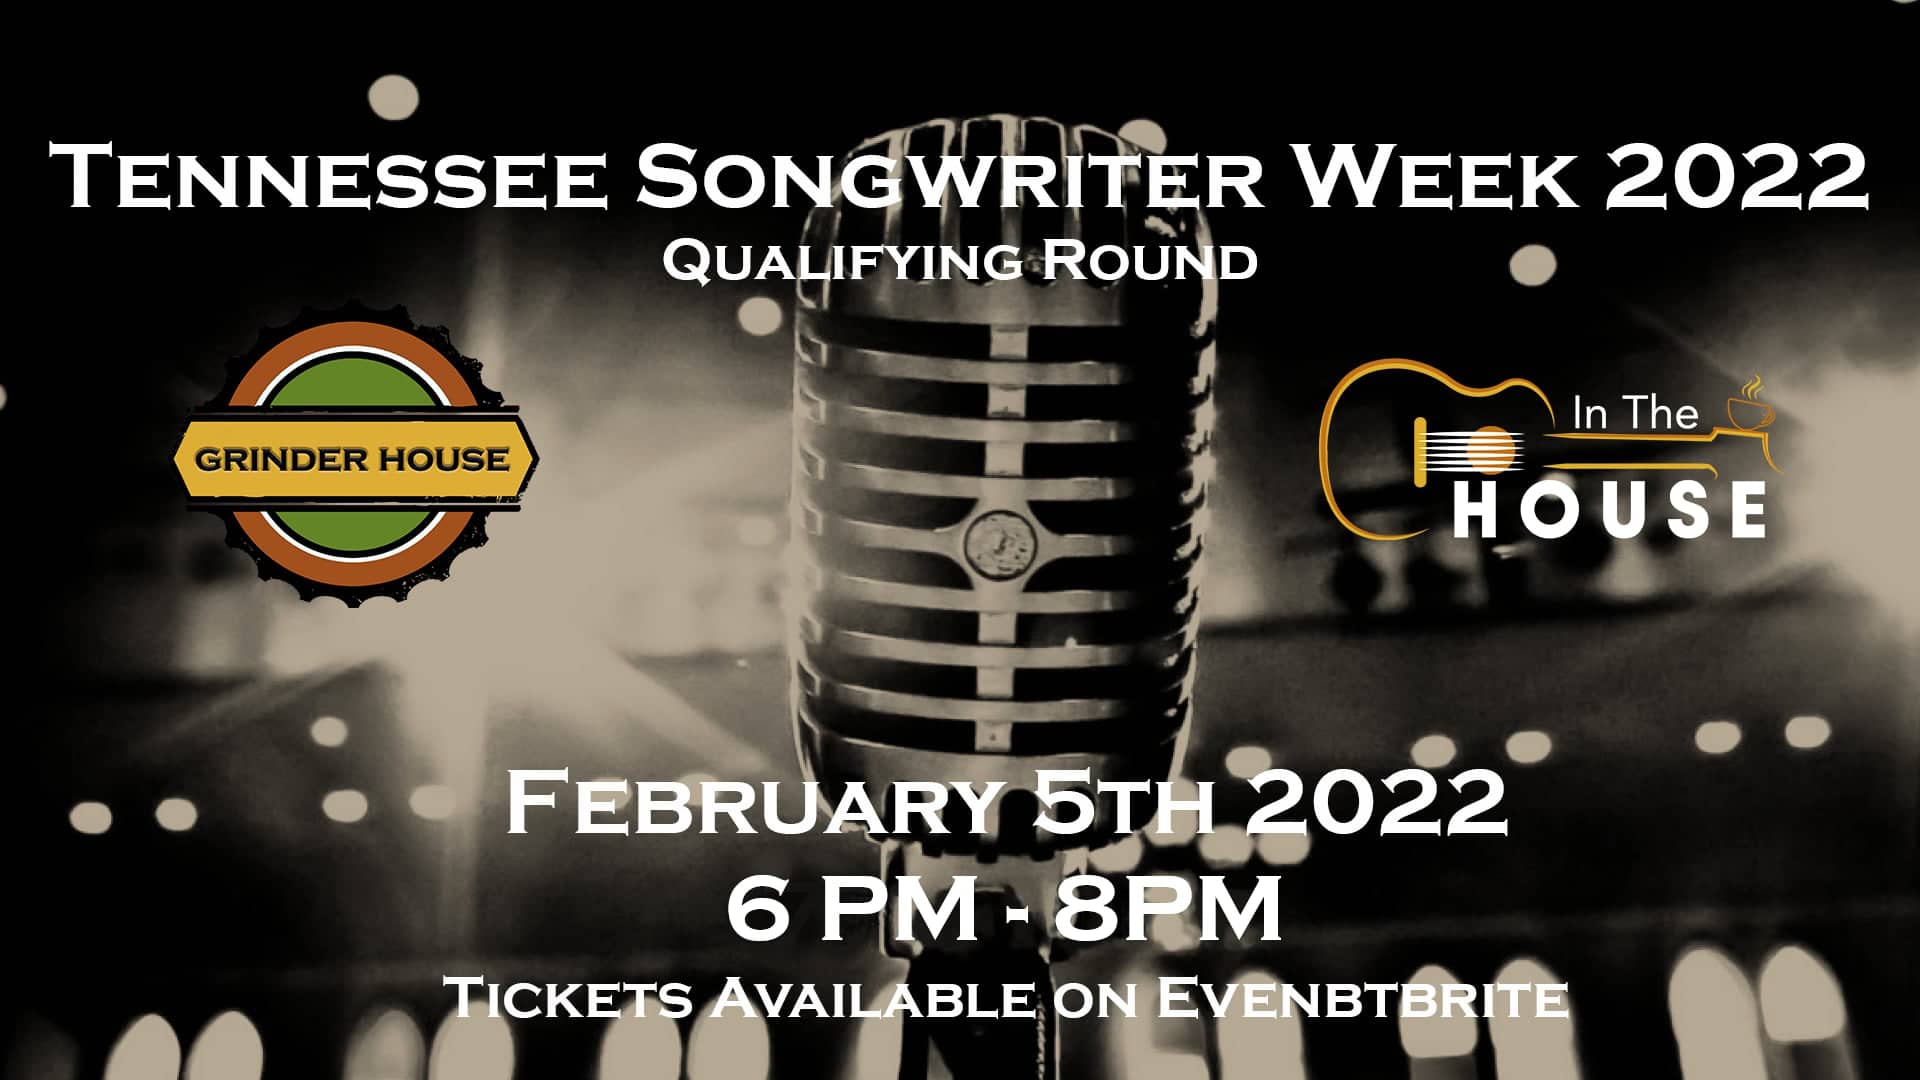 Tennessee Songwriter Week Qualifying Round on Vimeo